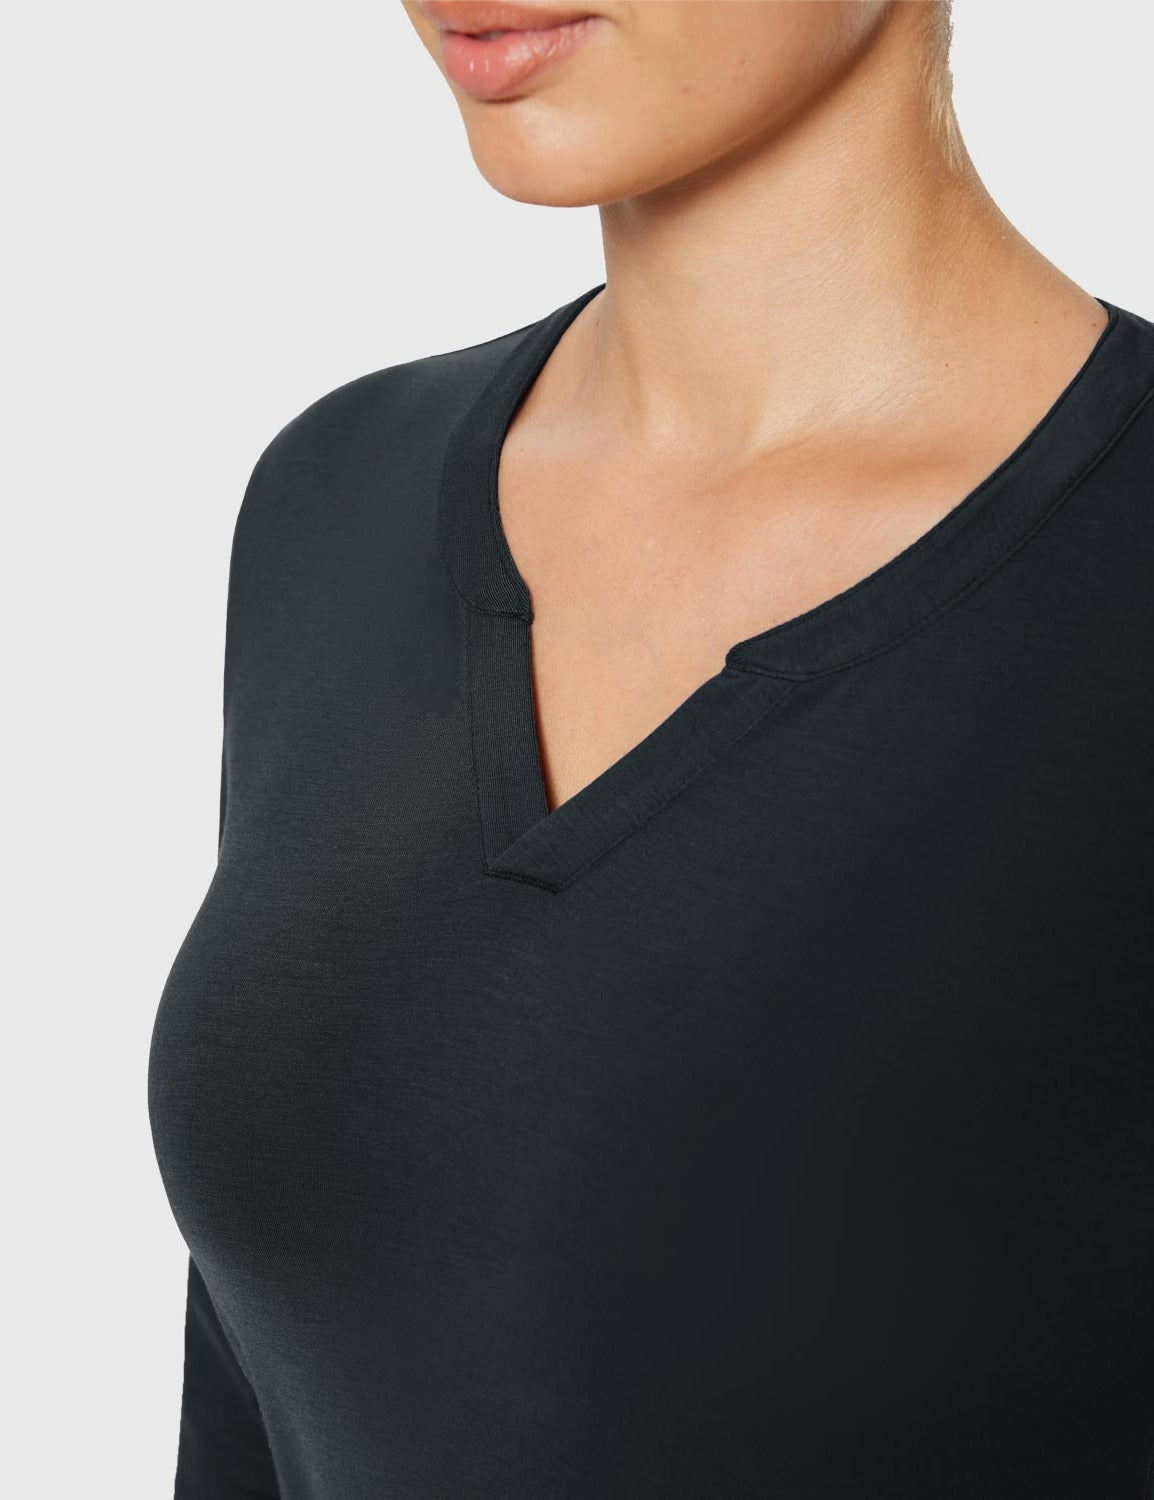 Baleaf Women's Ultra Soft Fall V-Neck Loose Fit Casual T-Shirt Anthracite Details